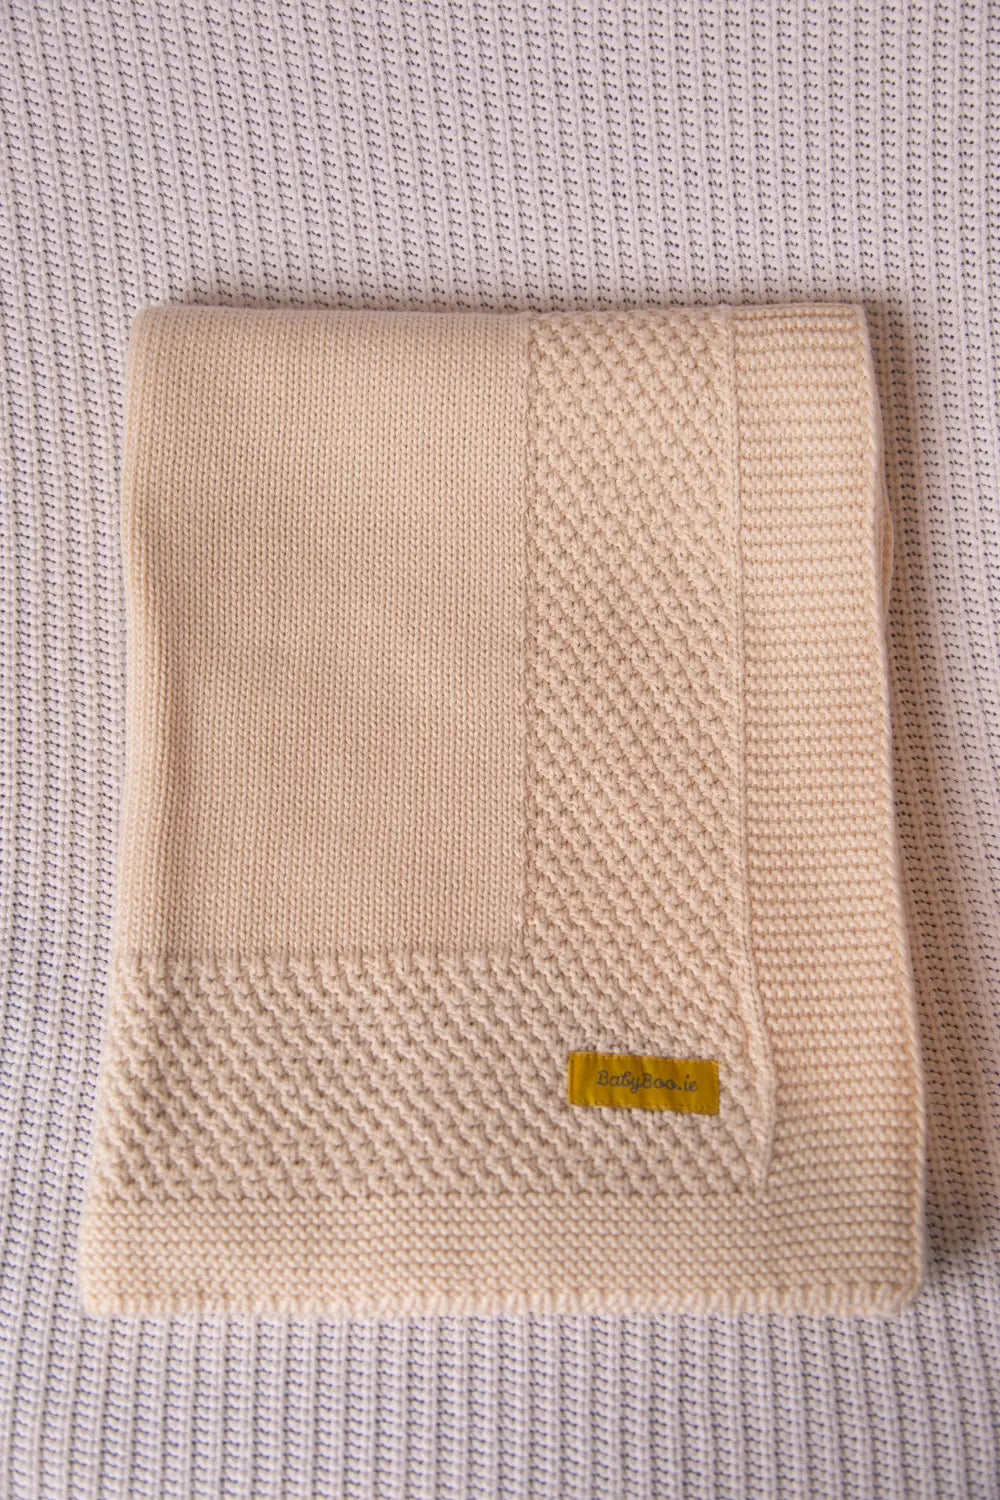 BlankieBoo Blanket | Cream